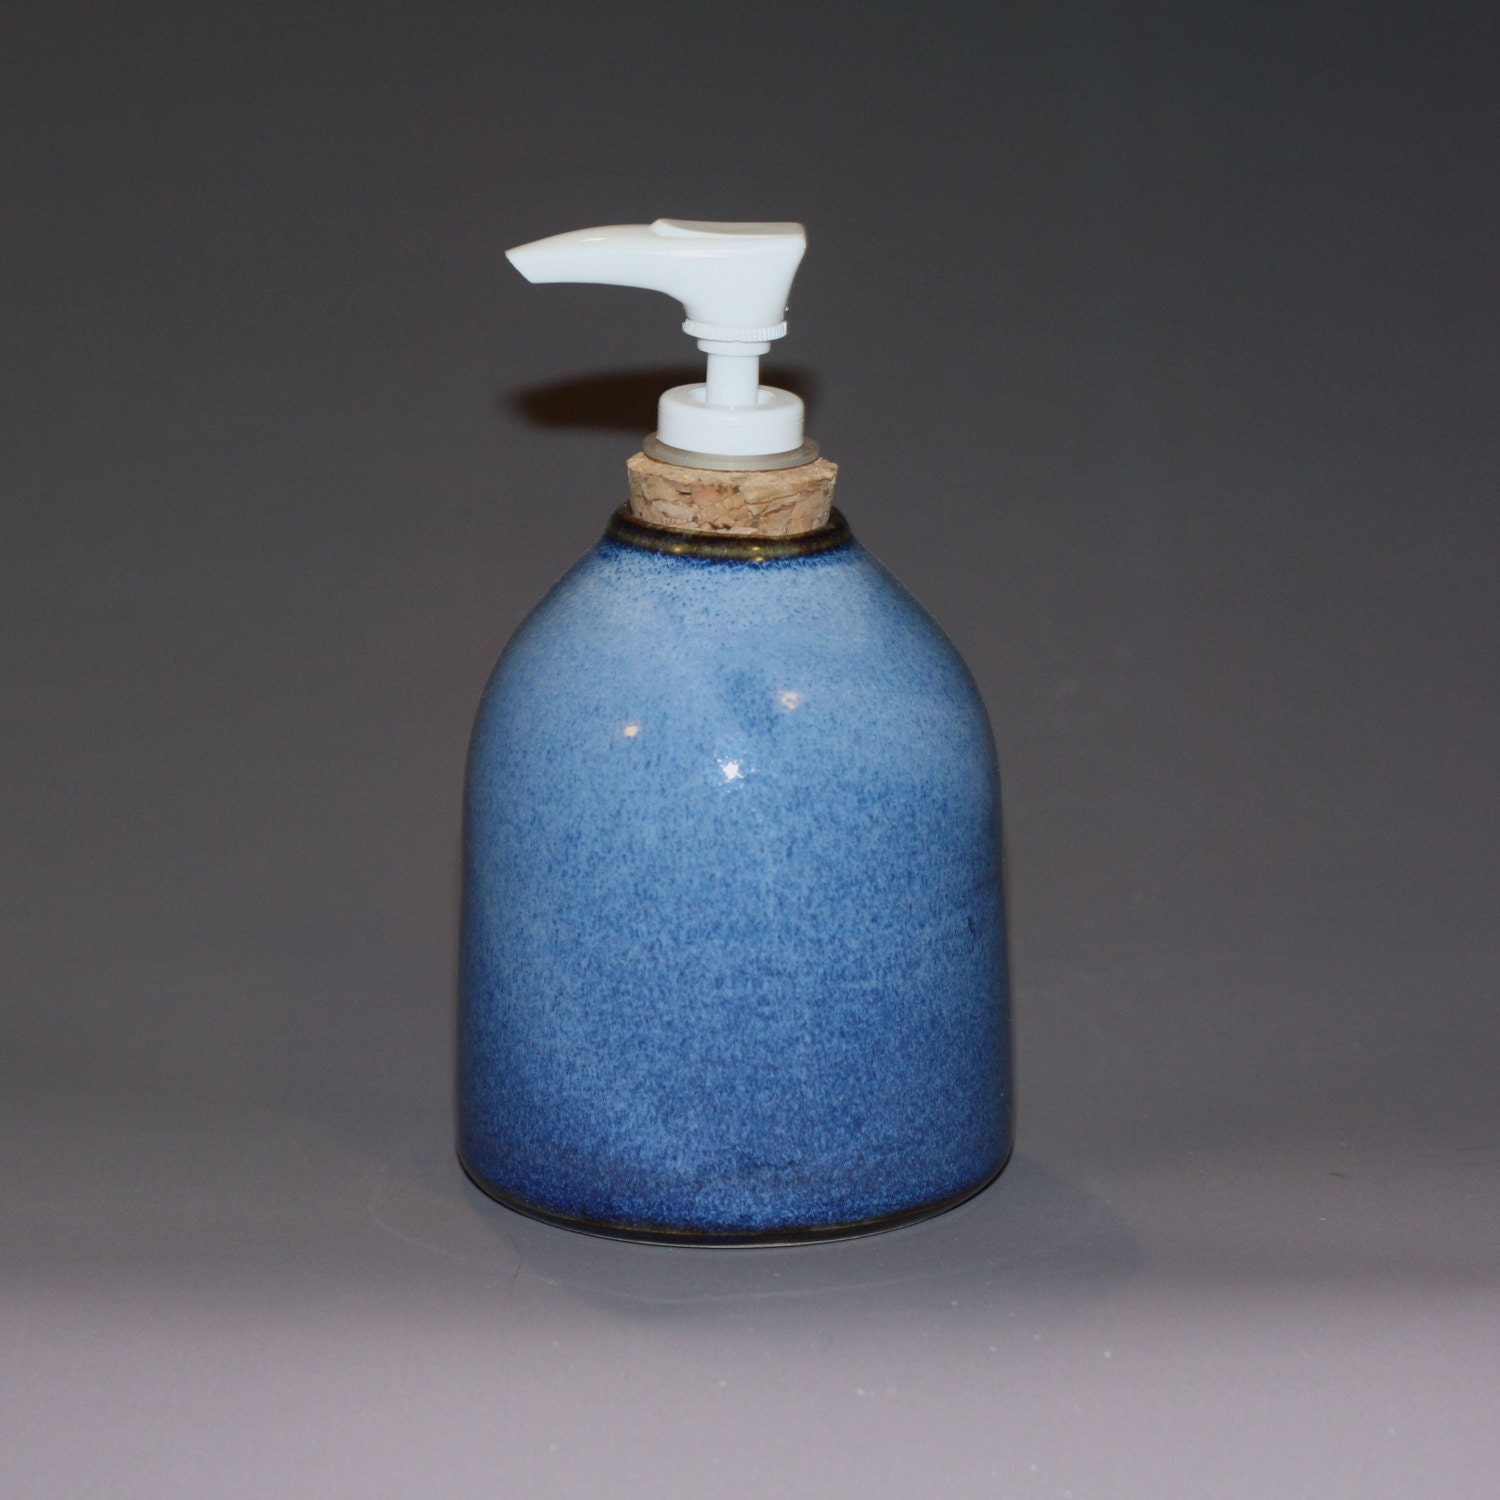 Ceramic Soap Dispenser / Soap Dispenser with Pump / Blue Soap